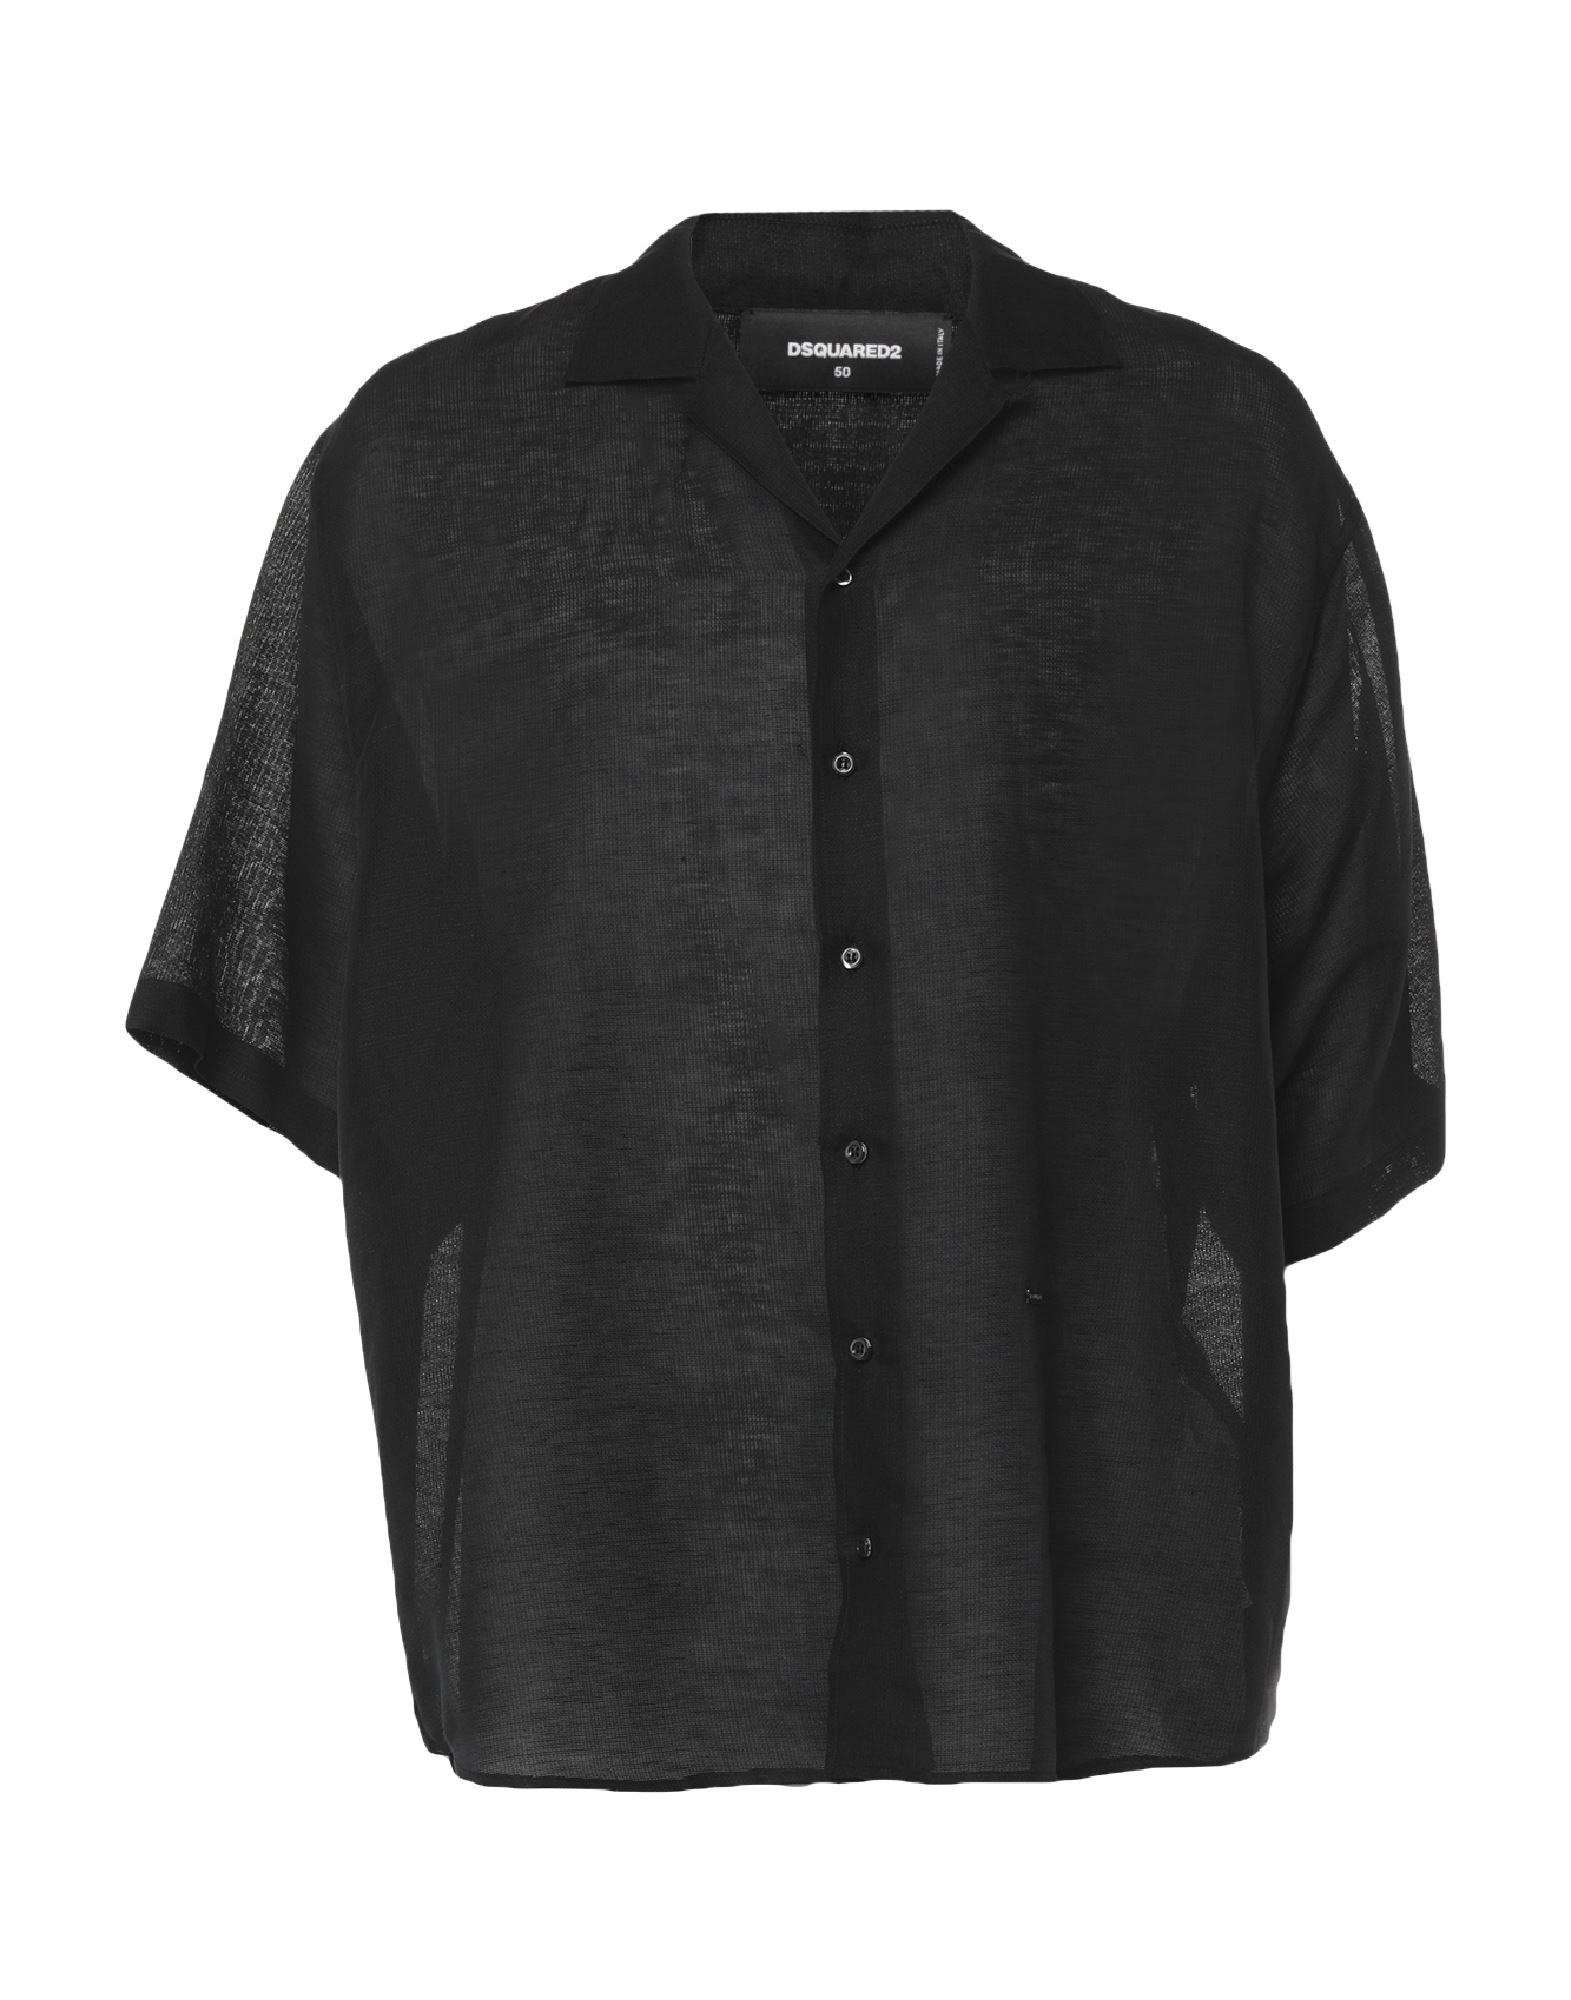 plain weave, logo, solid colour, front closure, button closing, short sleeves, classic neckline, no pockets